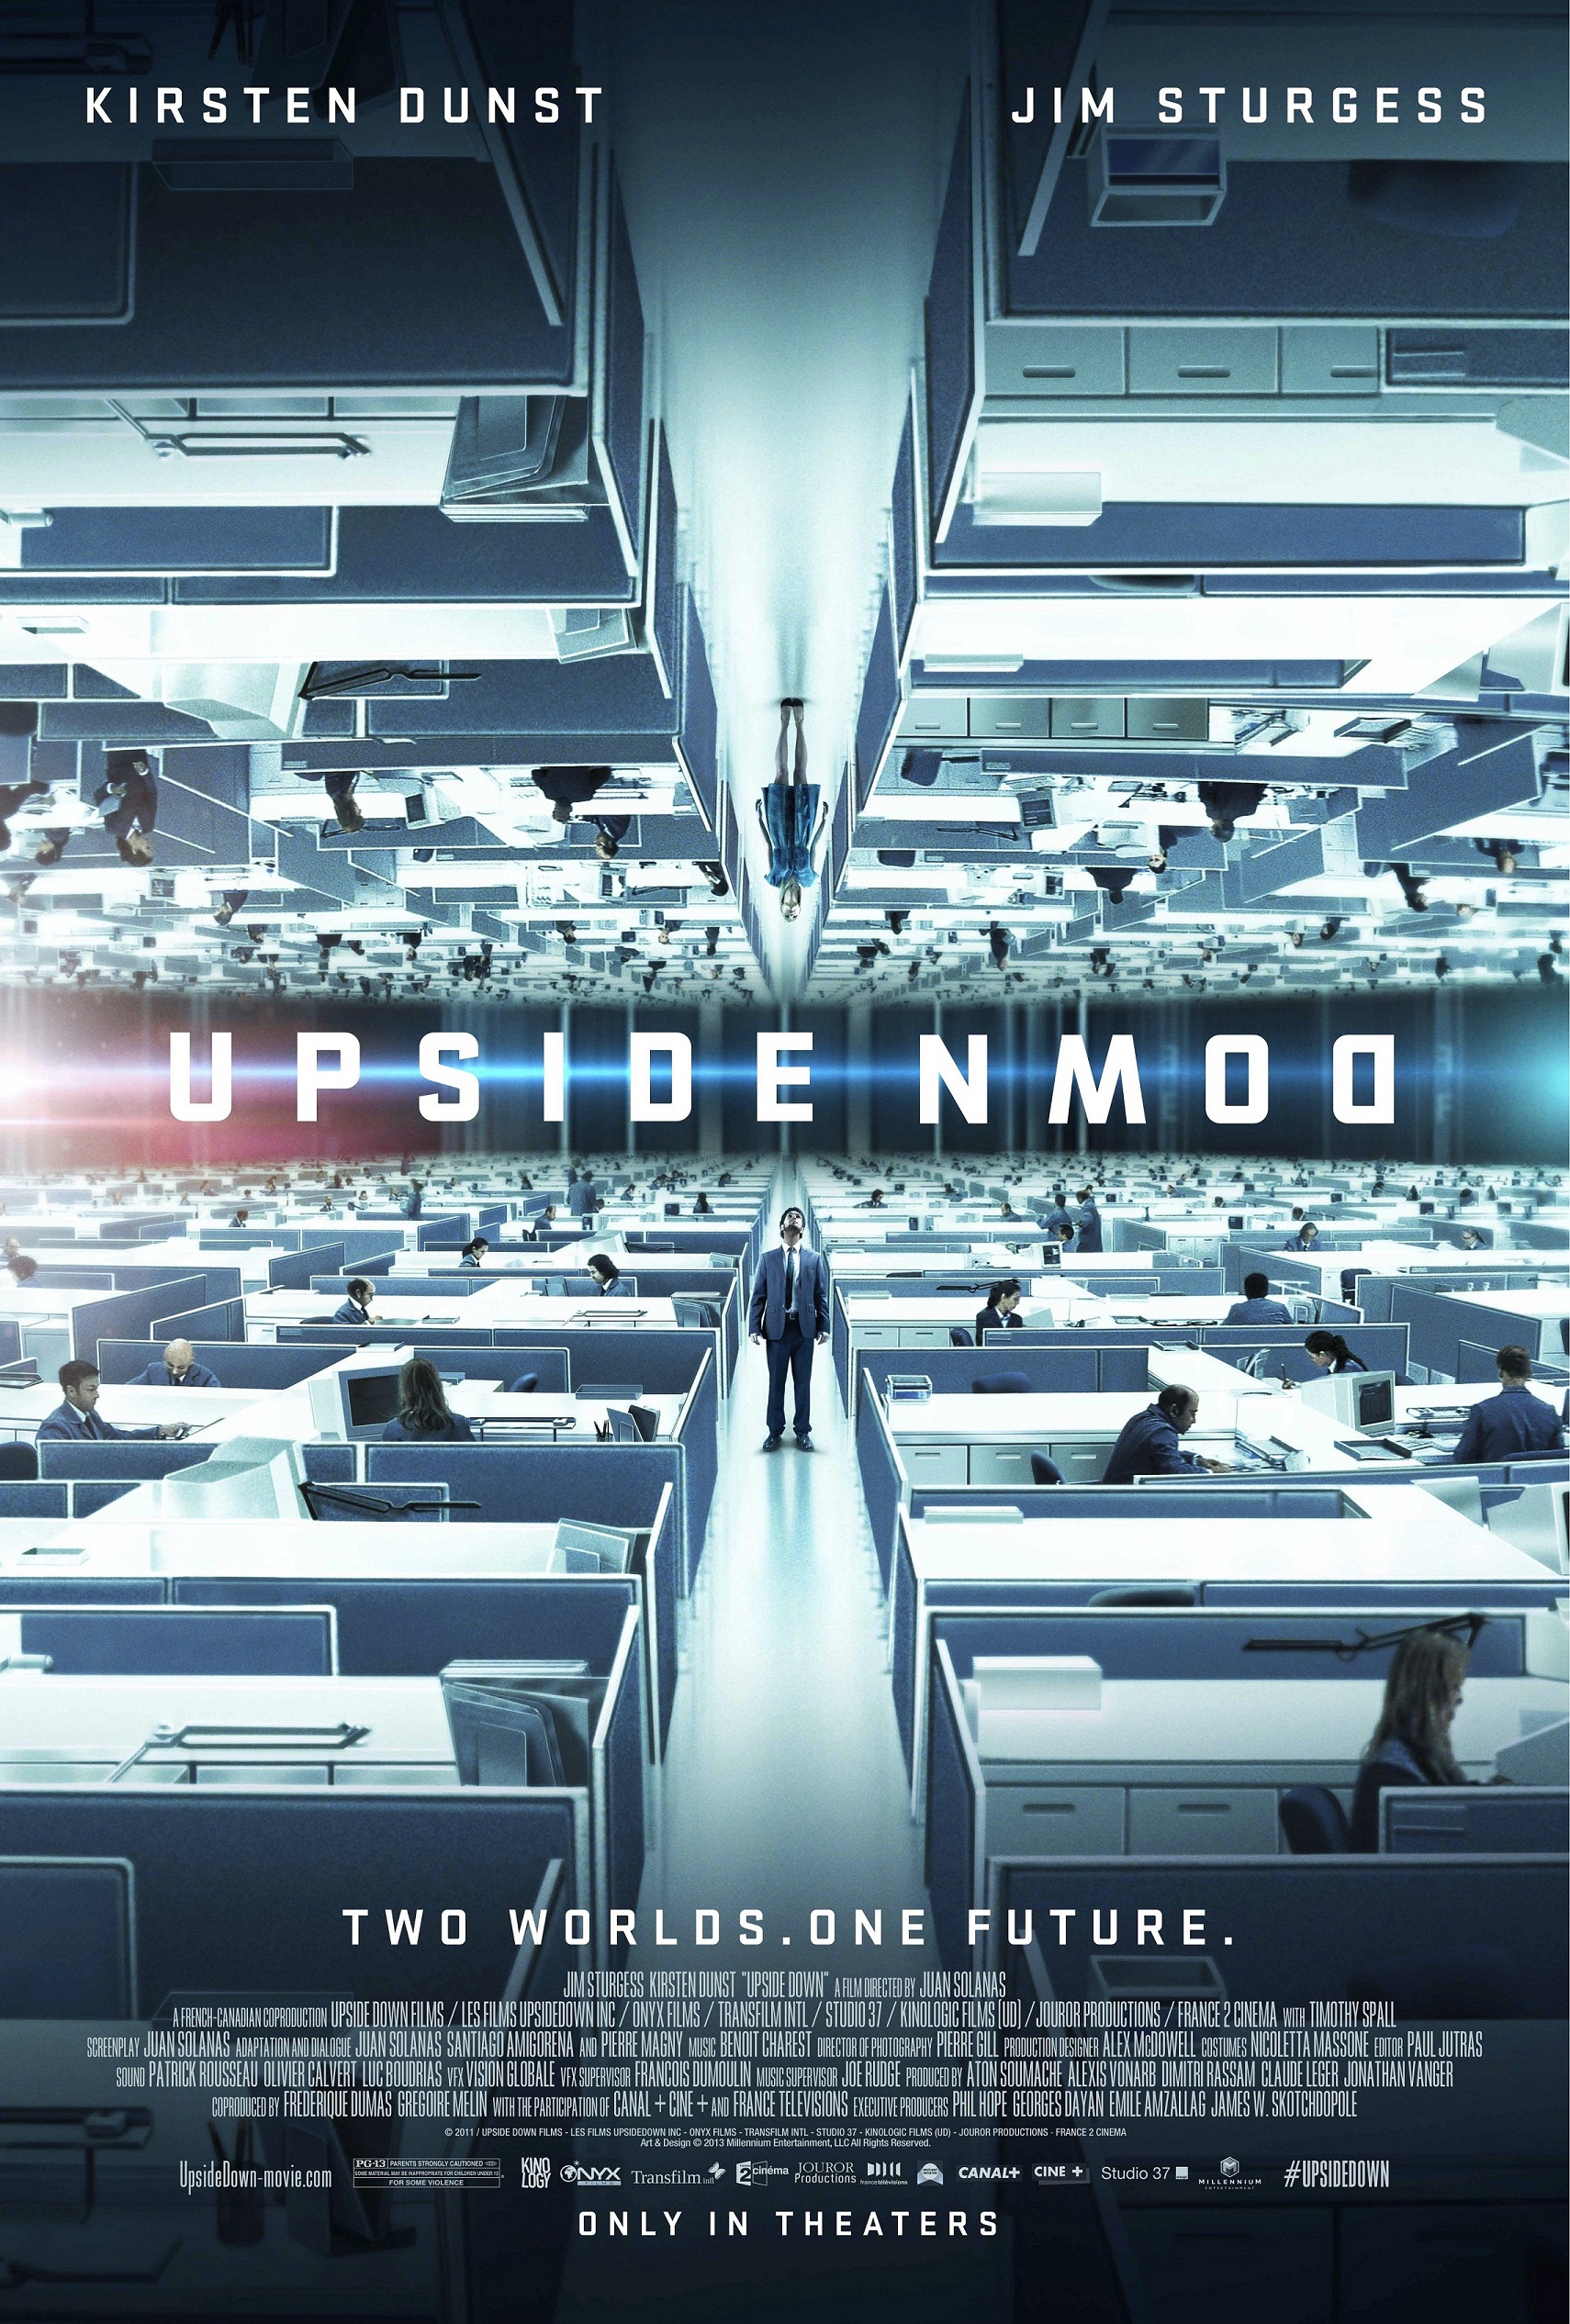 Upside Down - Movie Poster #1 (Original)